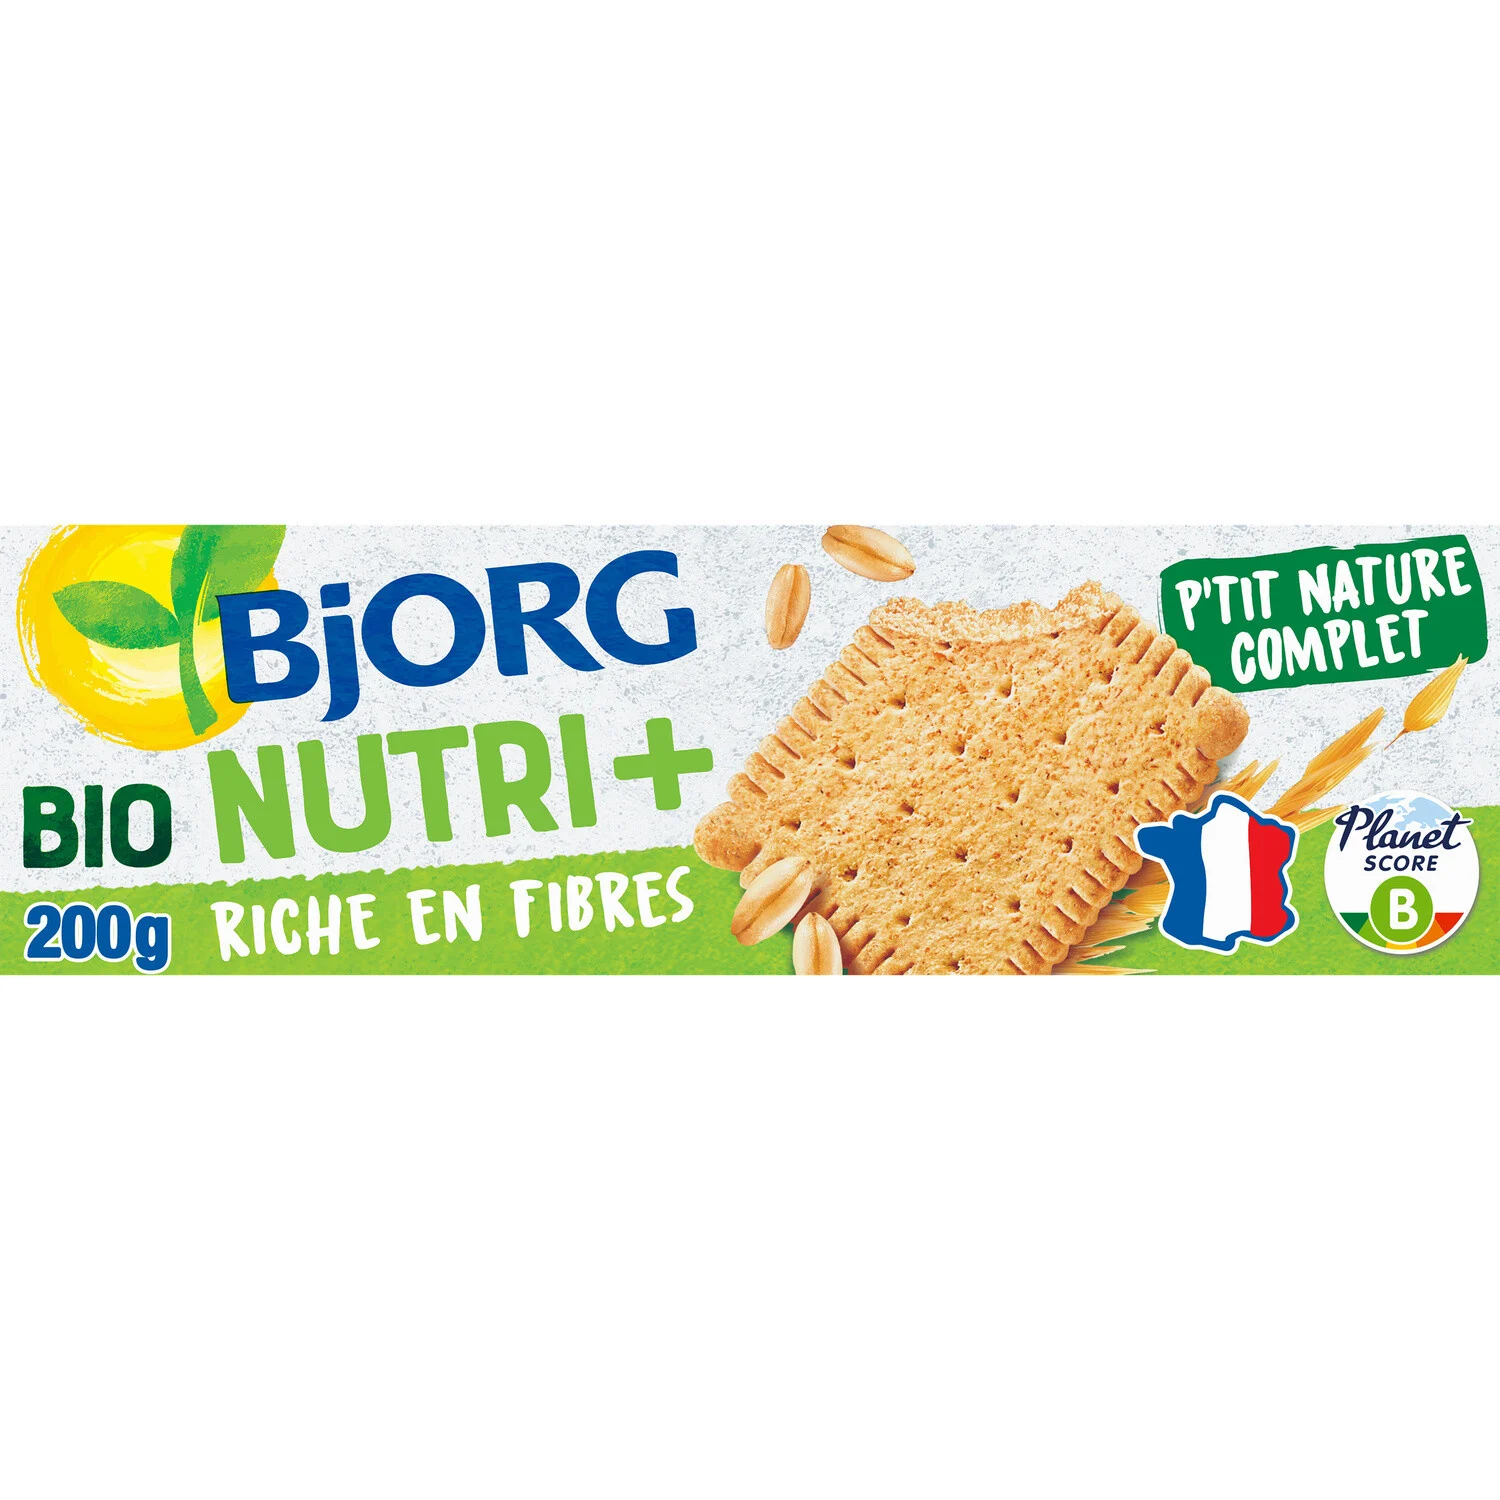 Biscuits Le P'tit Nature Bio 200g - Bjorg